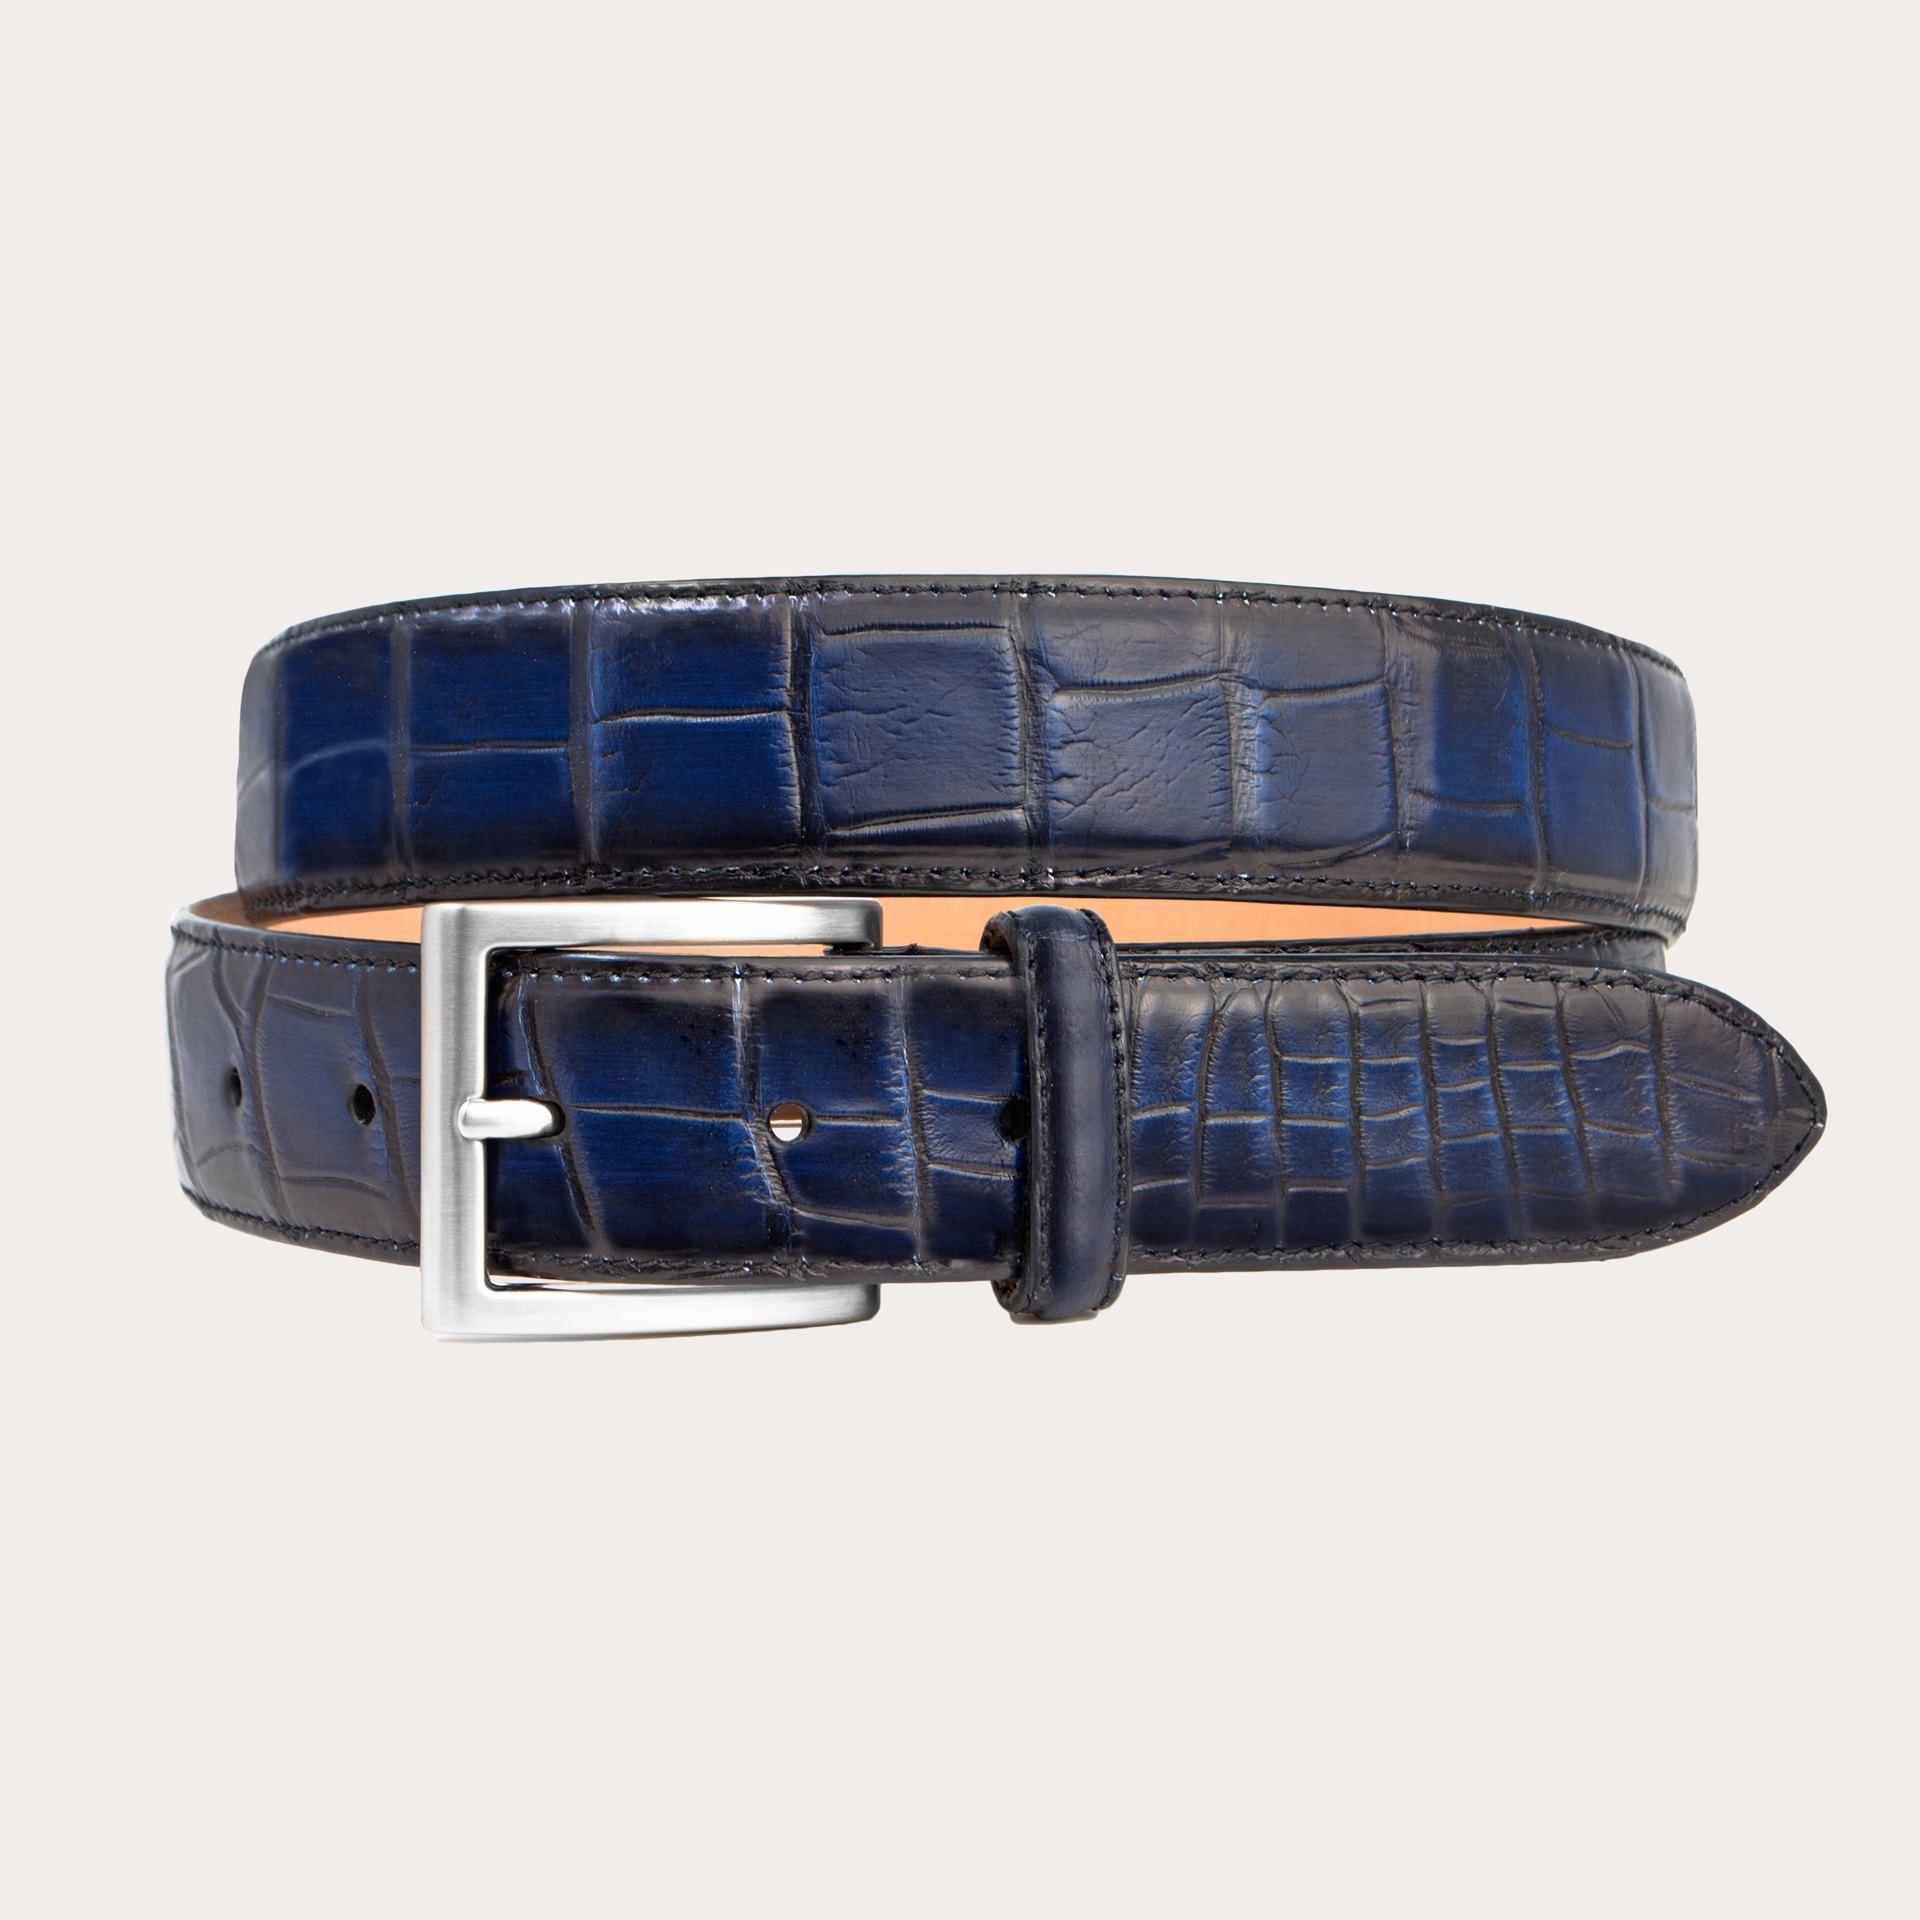 Luxury alligator belt with nickel free buckle, blue shaded black